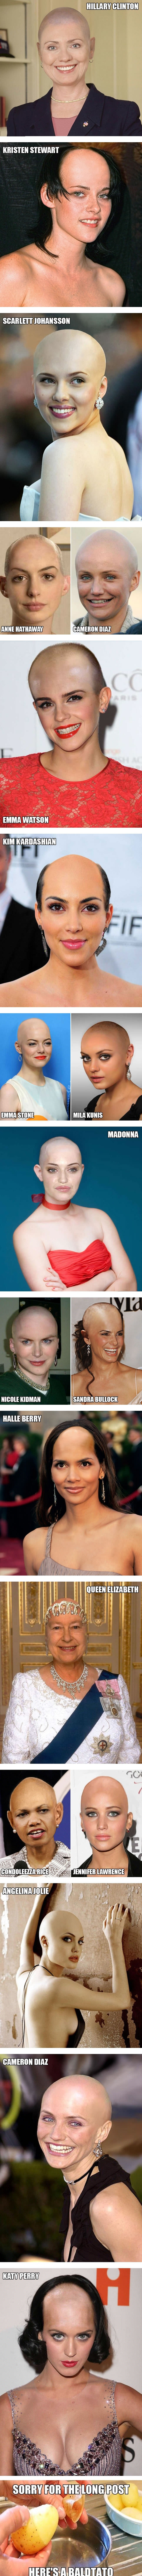 If female celebs were bald